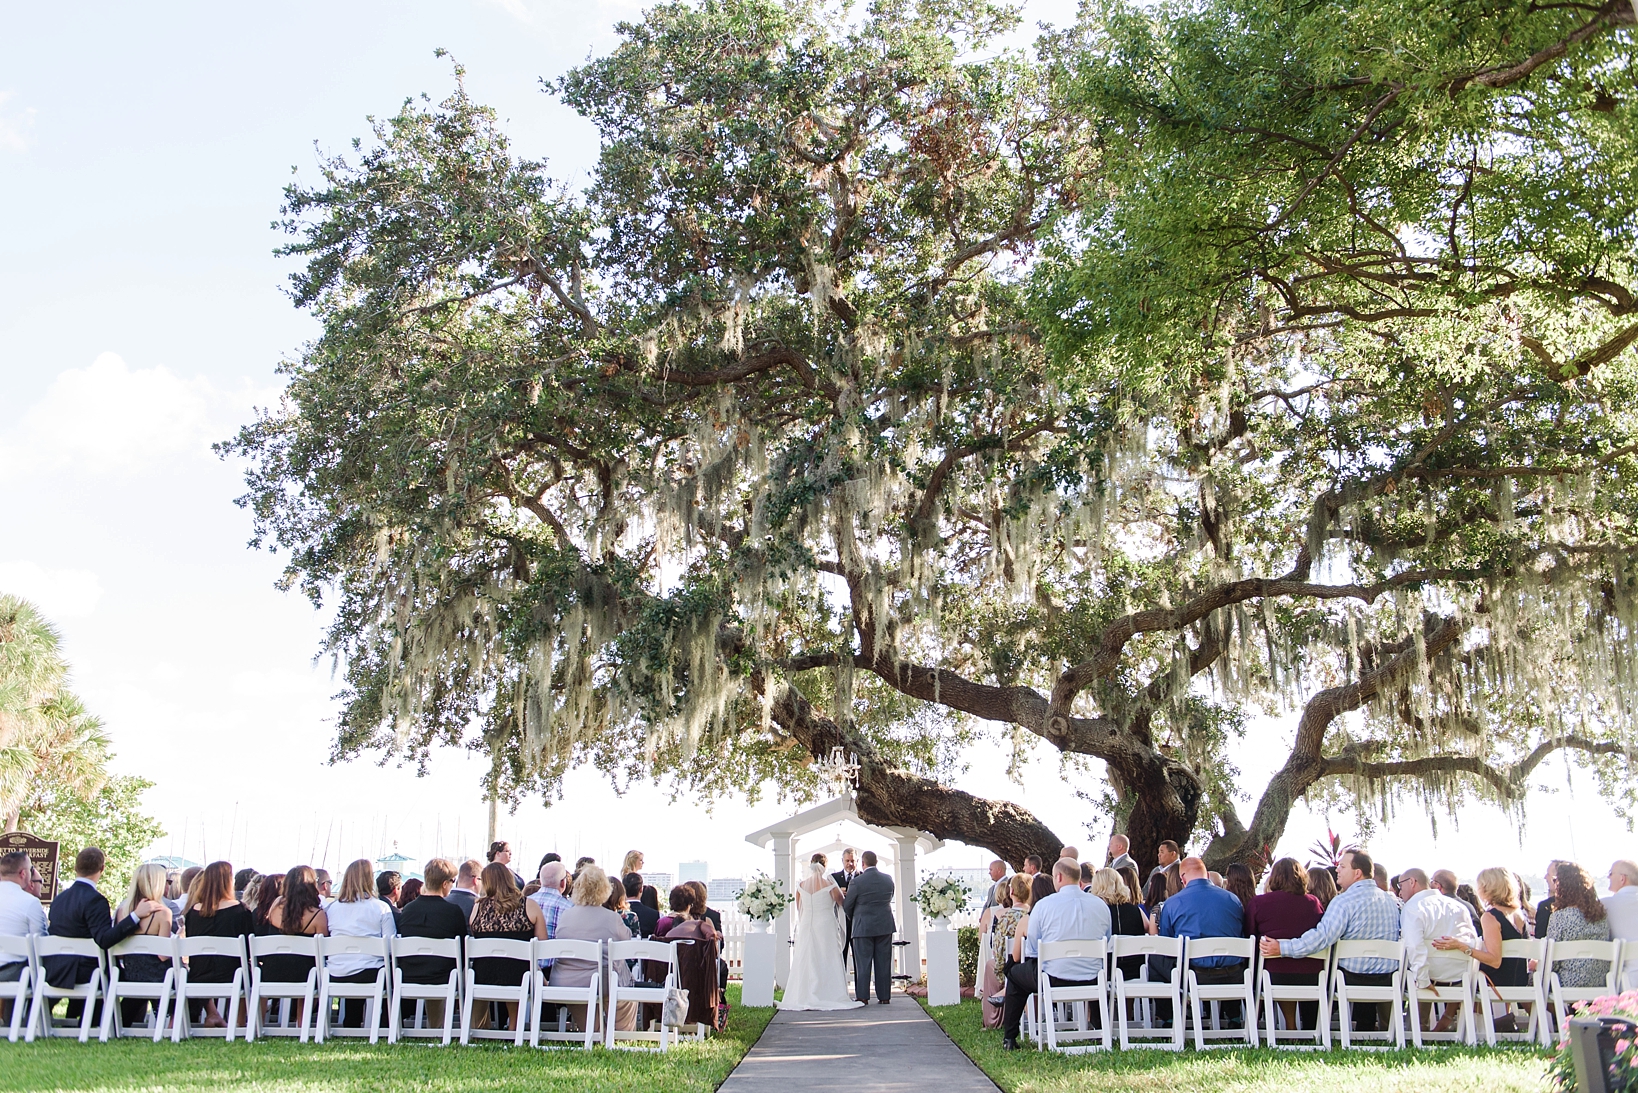 Wedding ceremony under a beautiful old oak tree in Palmetto, FL